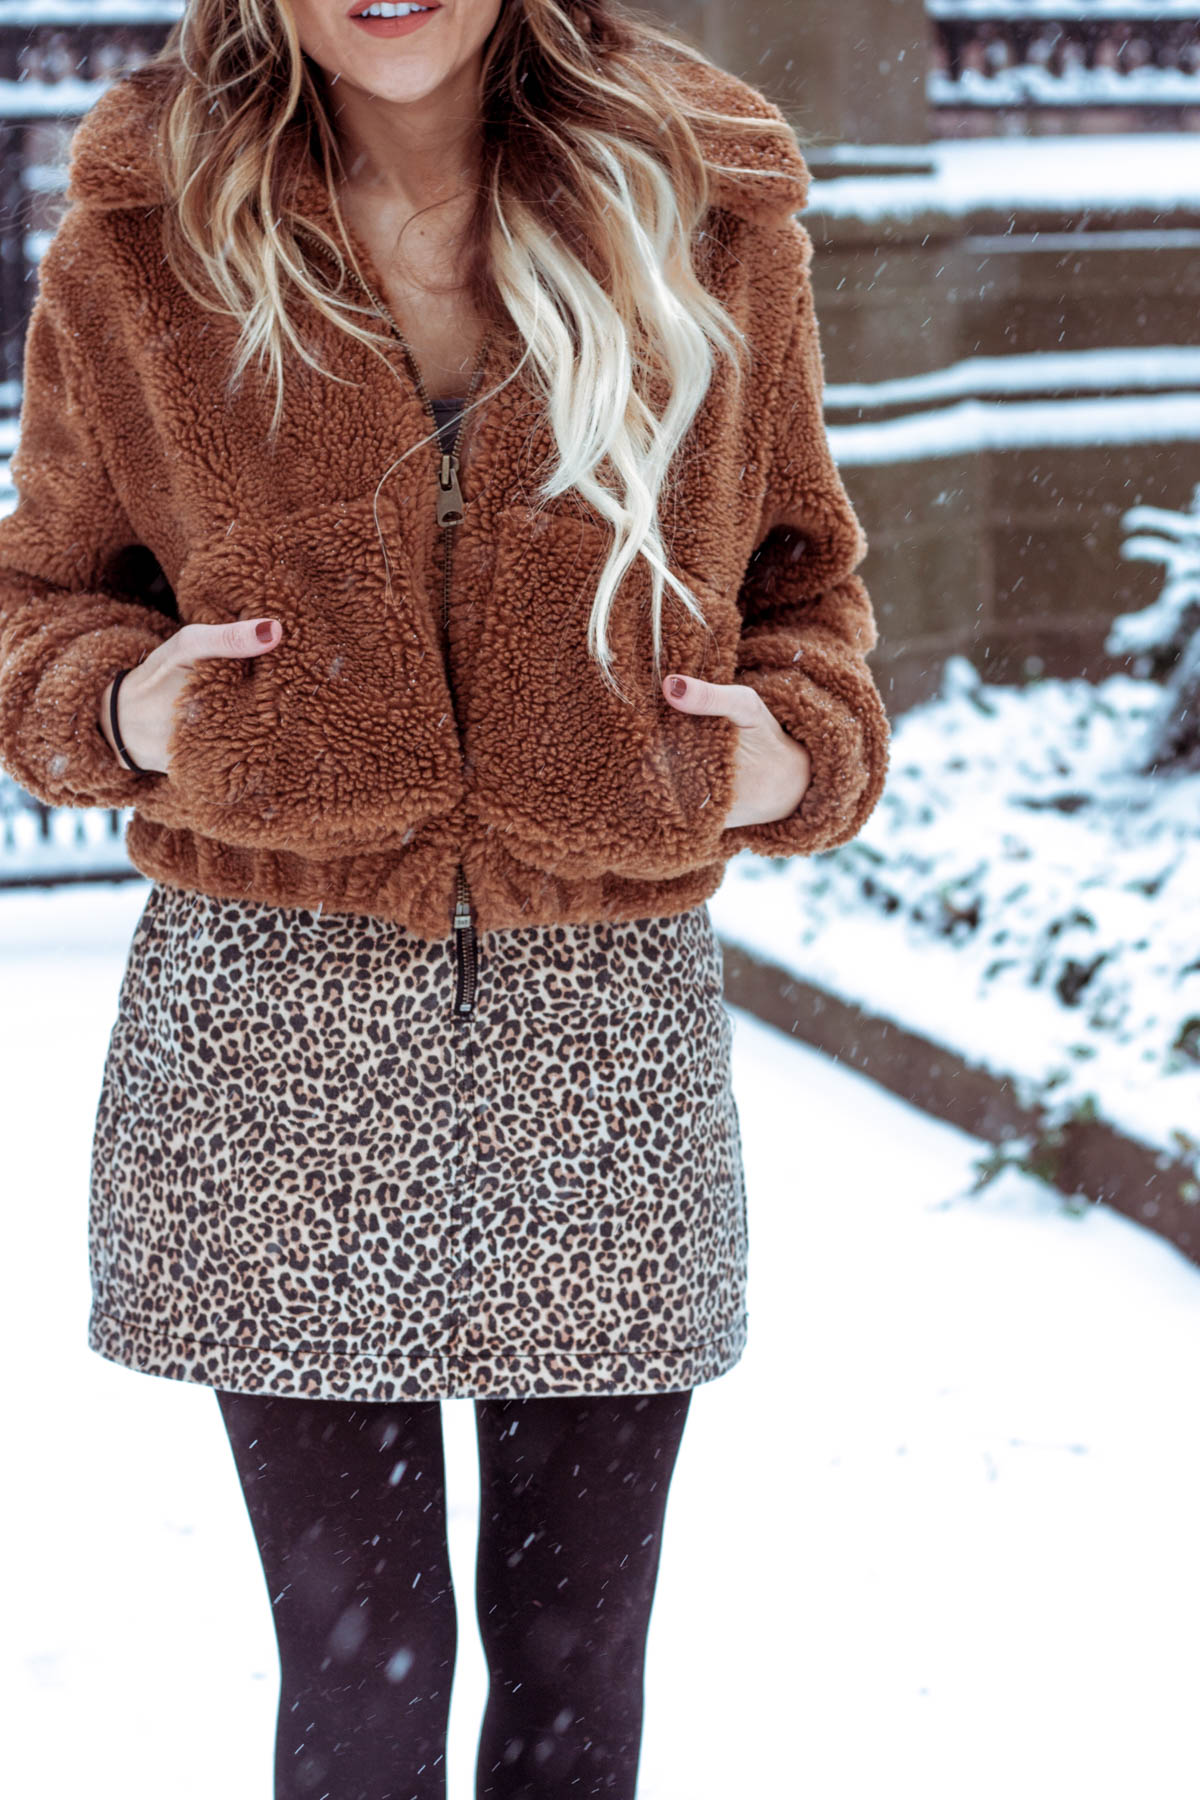 Urban Outfitters Teddy Coat, Leopard Print Skirt, Orange Beret